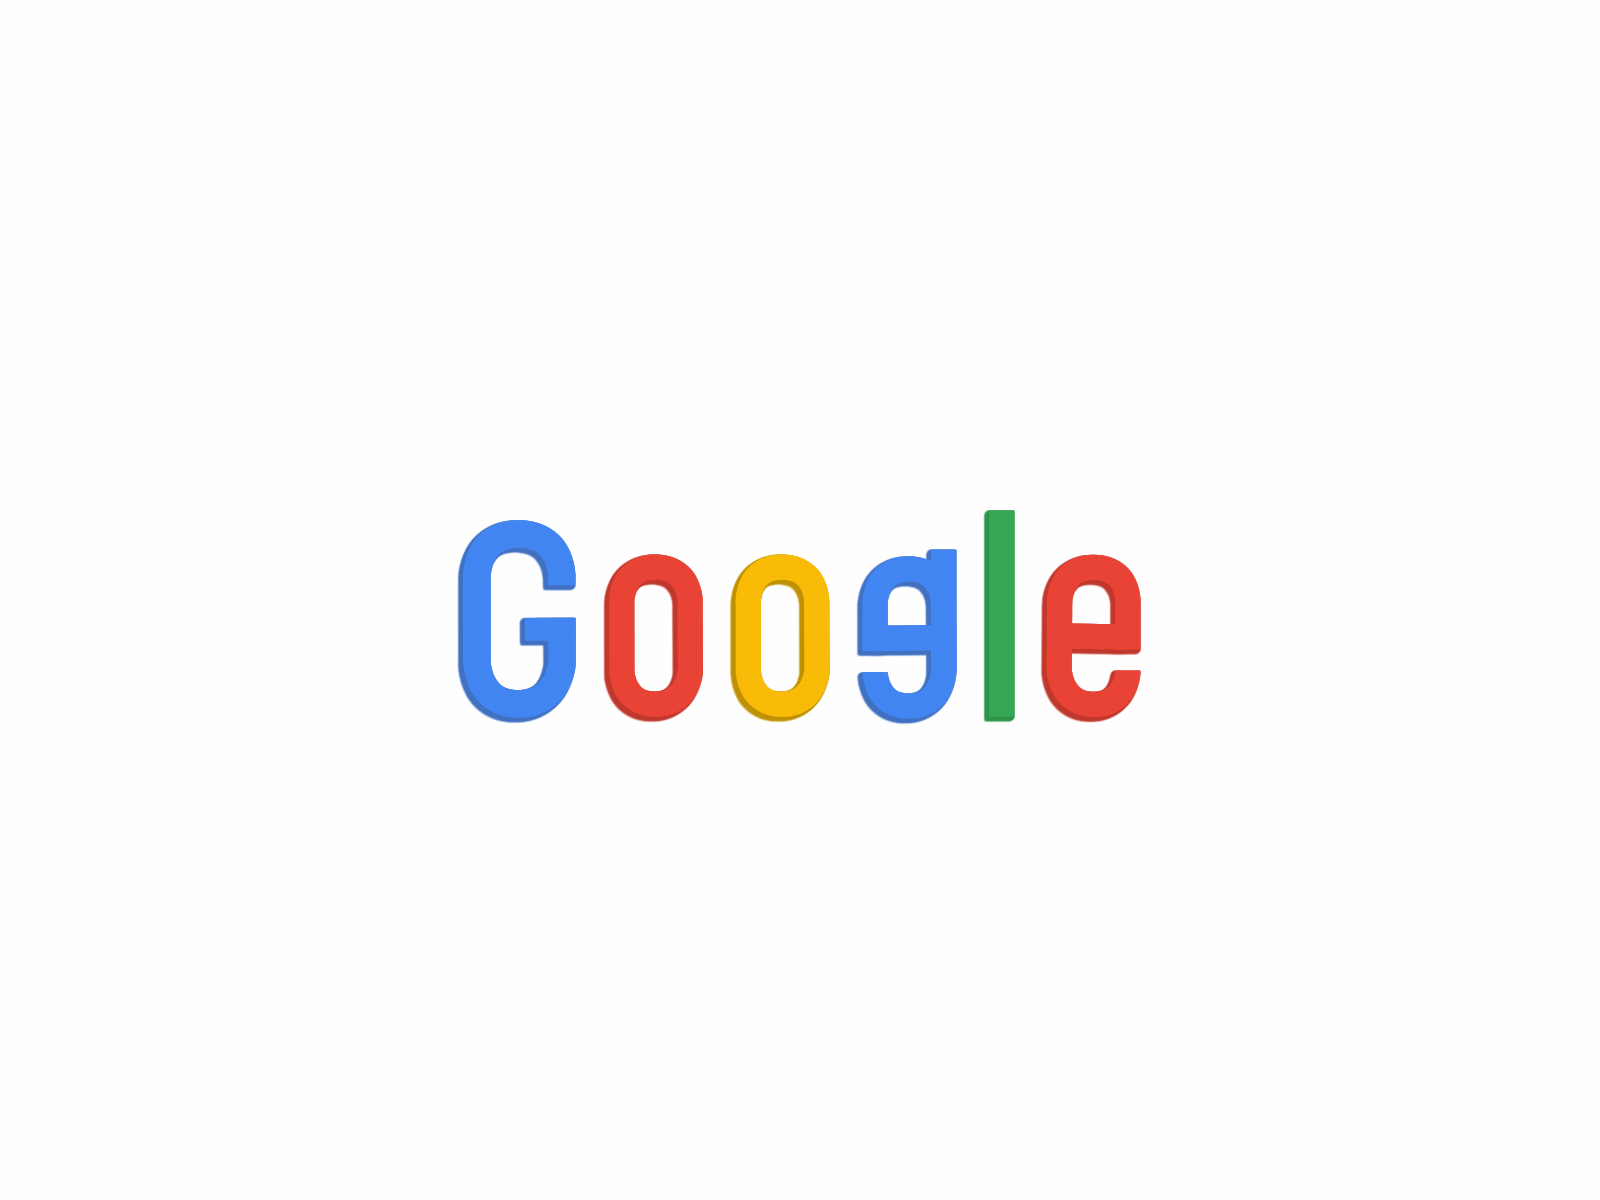 Ok Google by Artem on Dribbble